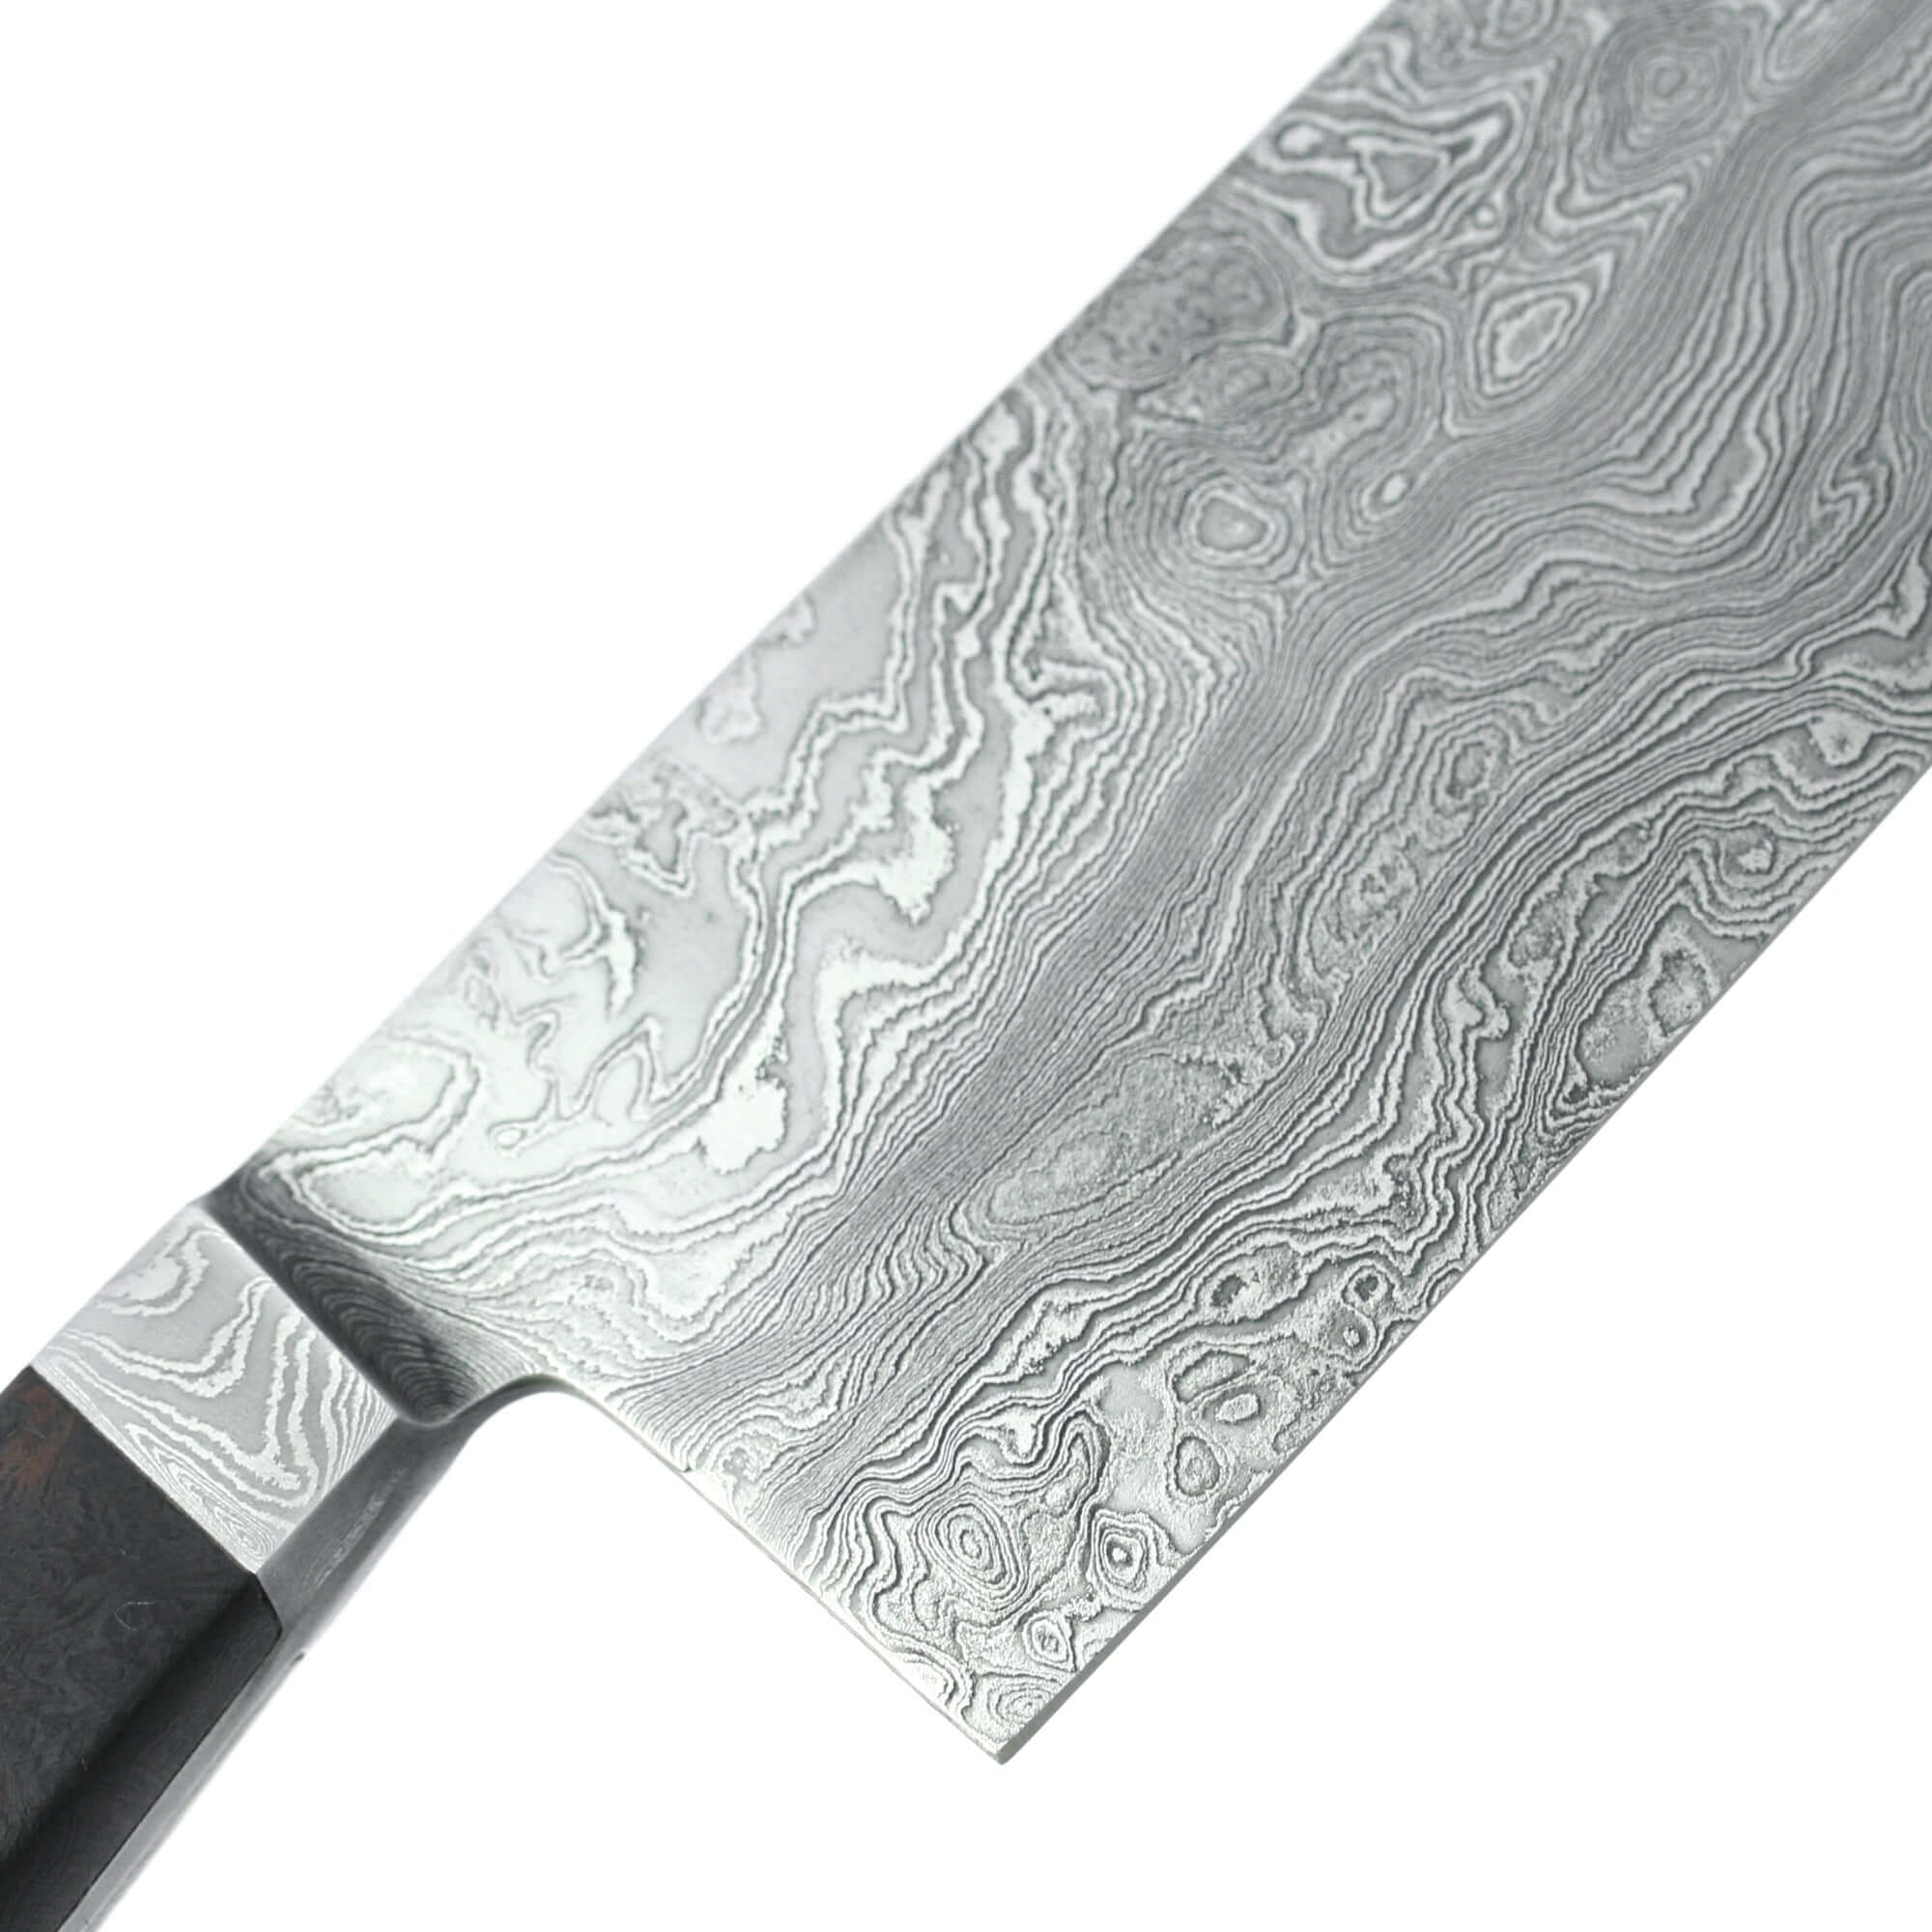 CHAI DAO | Damascus Steel Chef Knife 6.2-inch Blade